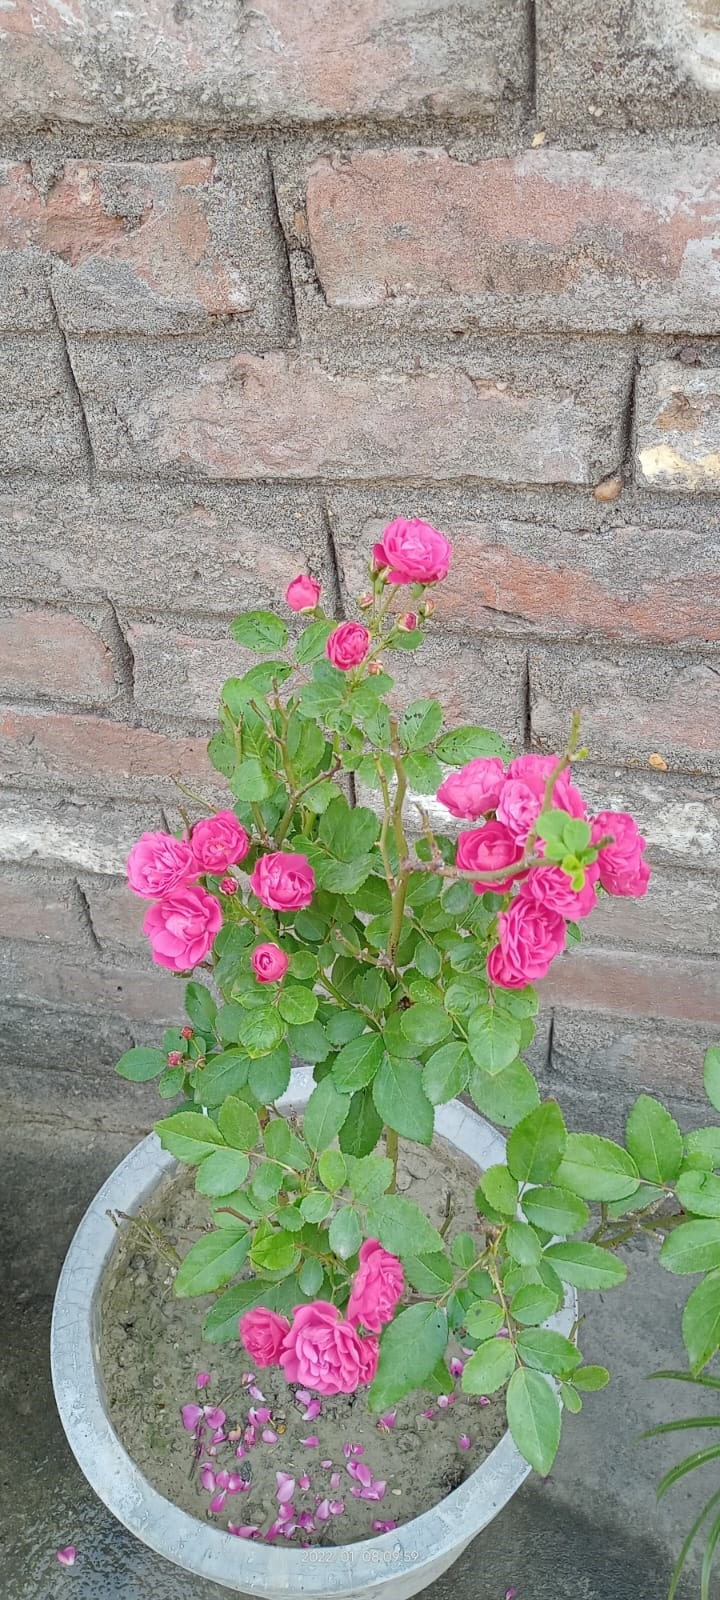 beautifull rose flower in gamala